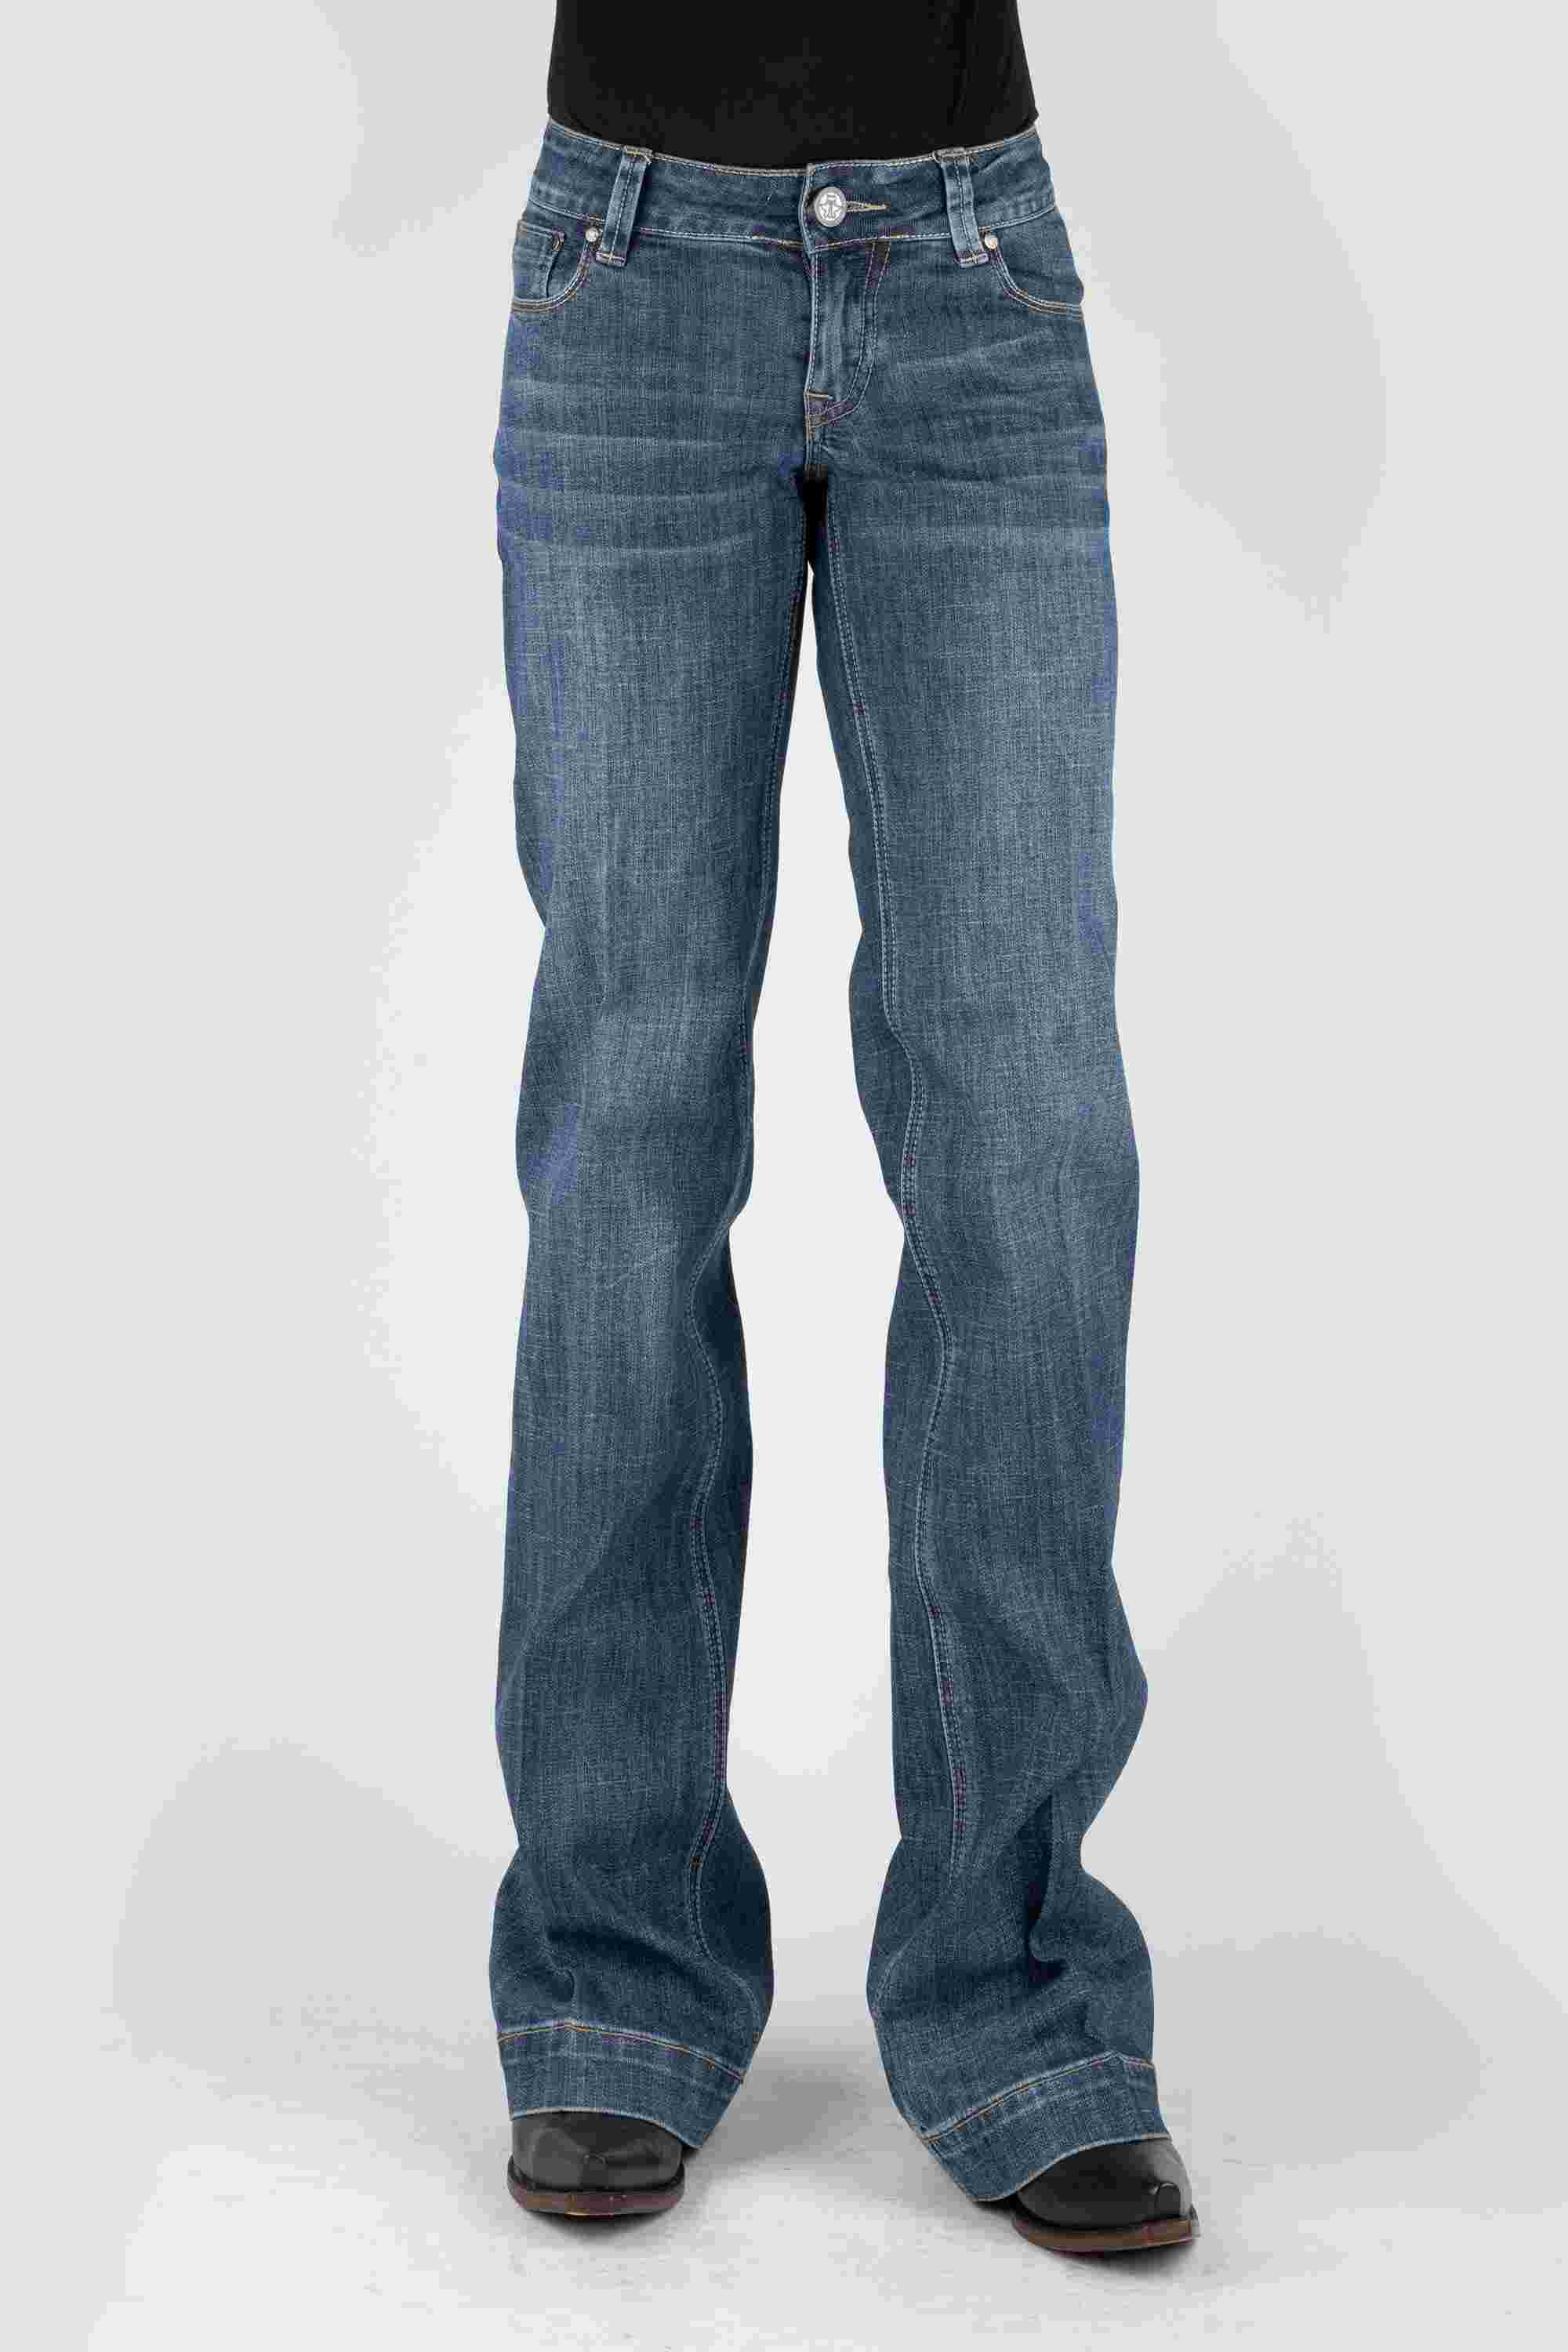 Tin Haul Womens Trouser Jean